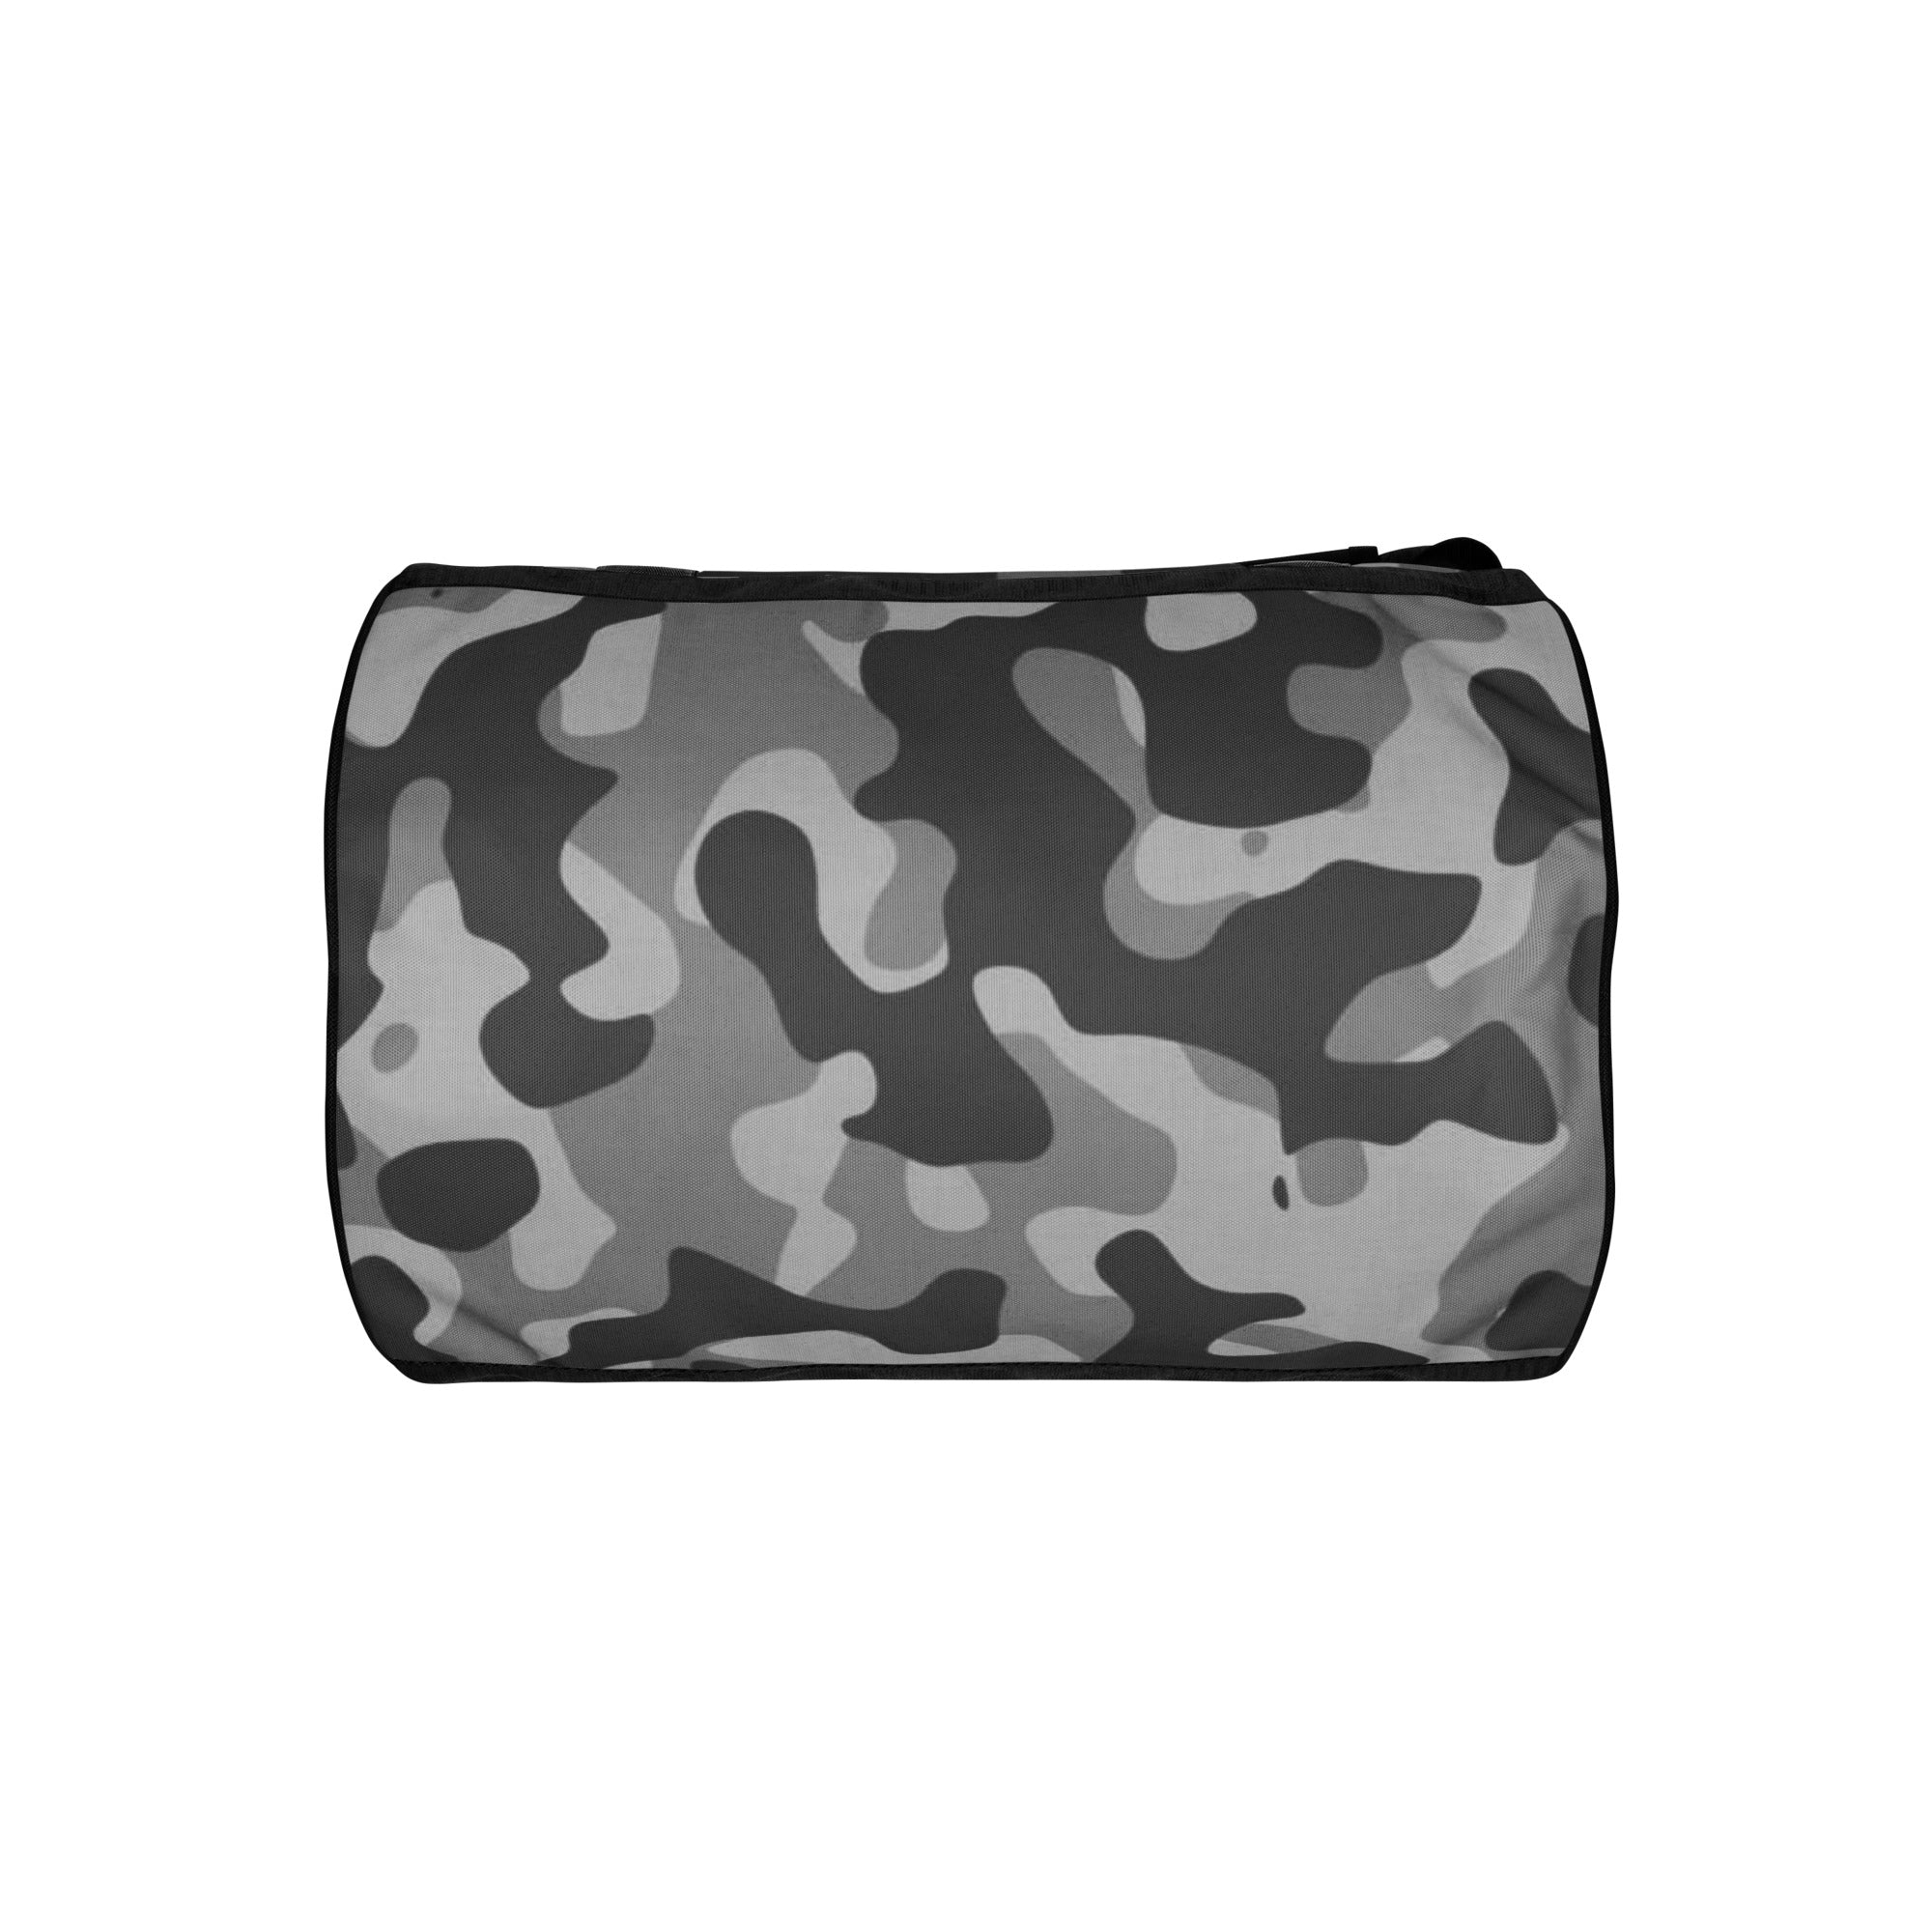 Monochrome Camouflage Gym Bag